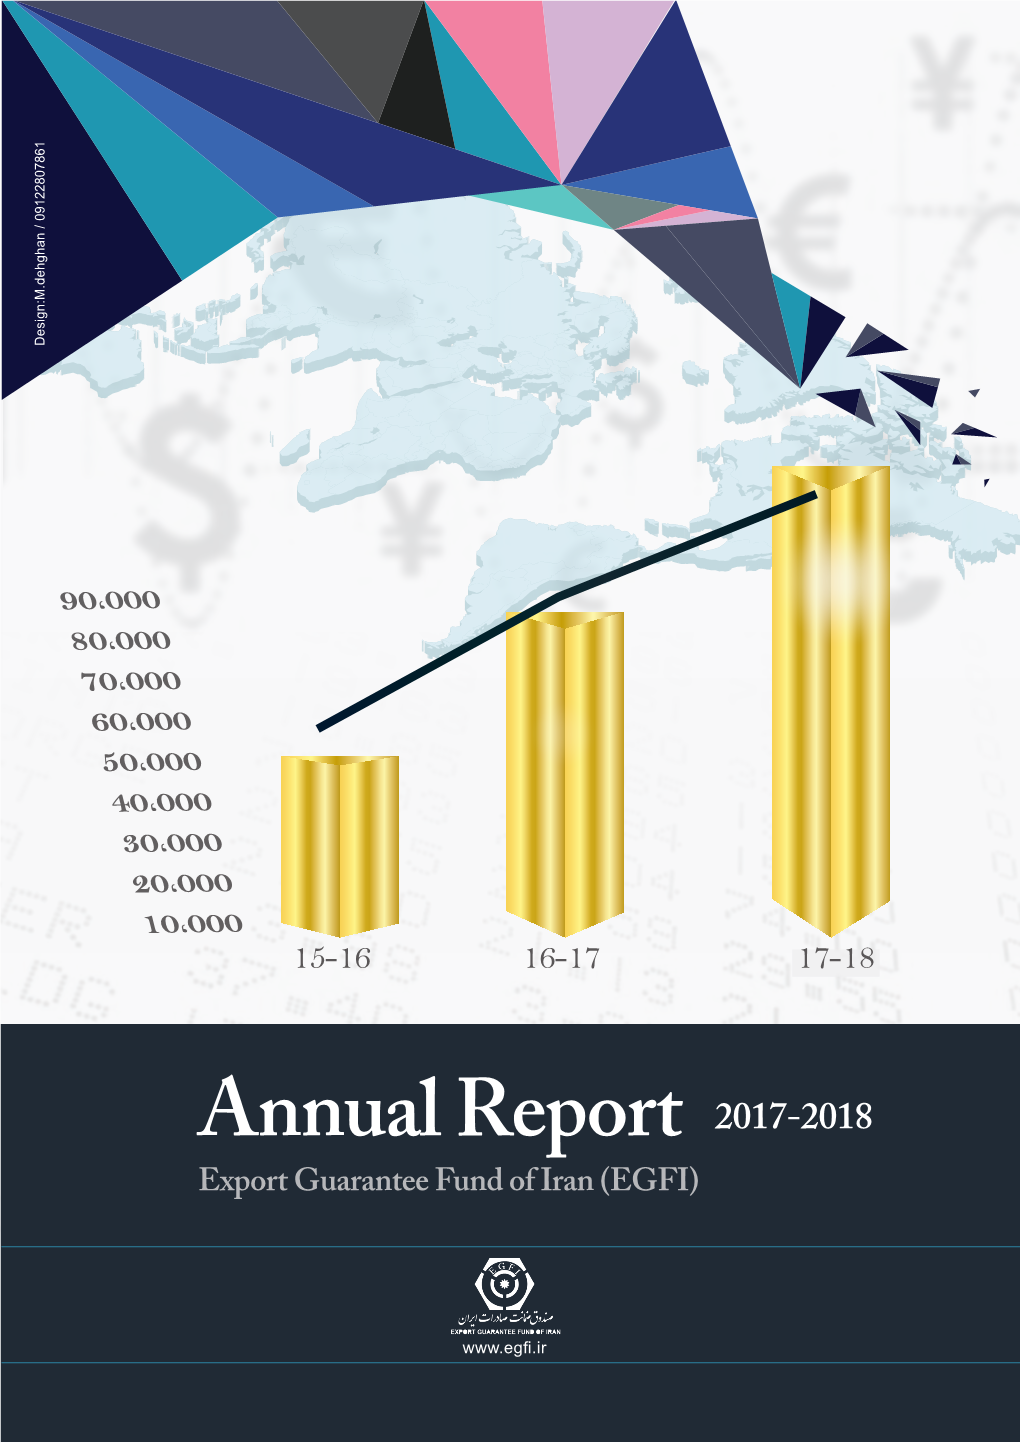 Annual Report 2017-2018 Export Guarantee Fund of Iran (EGFI)